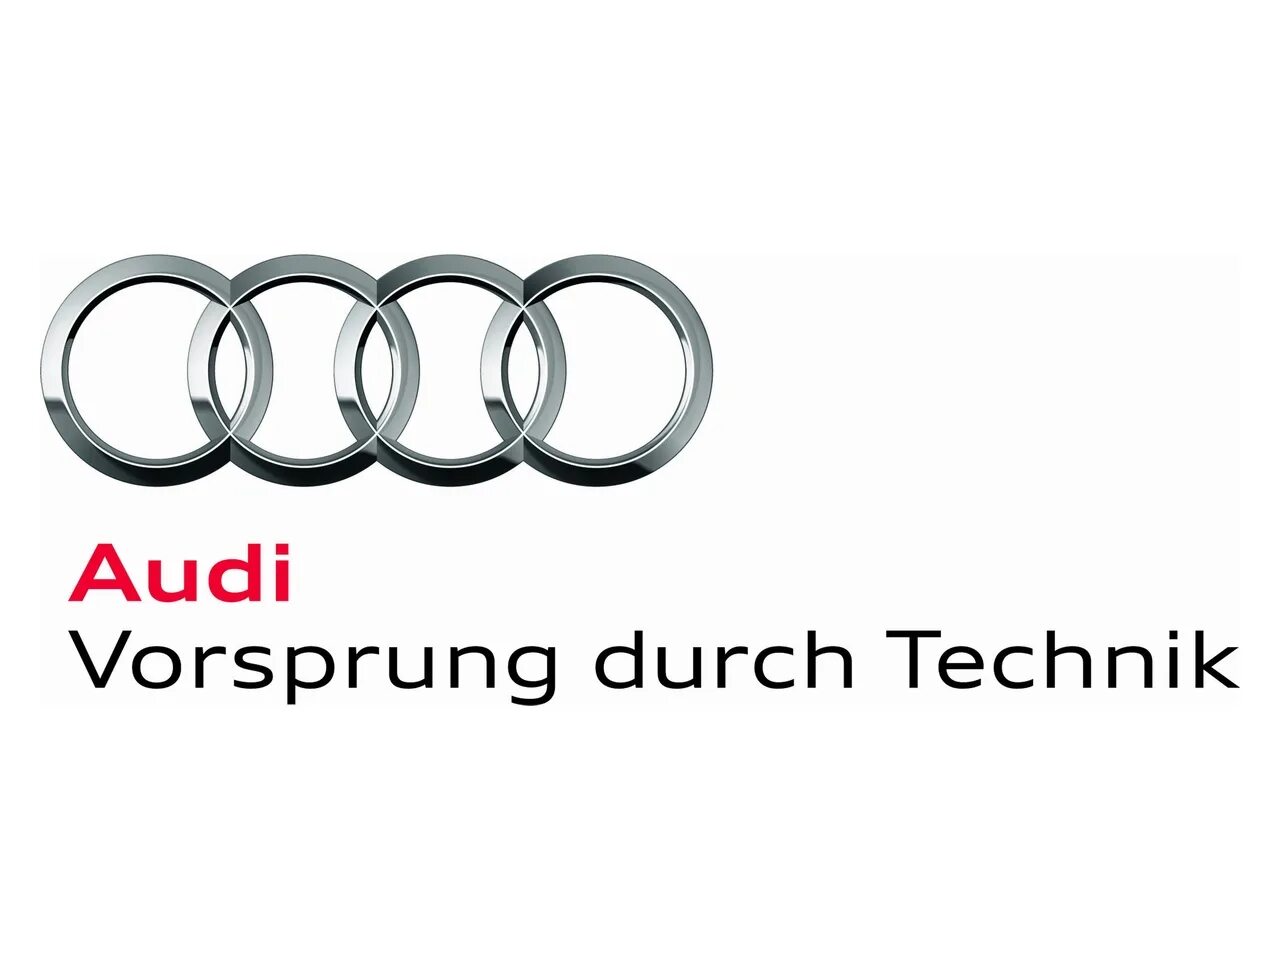 Audi логотип. Audi слоган. Ауди надпись. Audi лозунг компании.